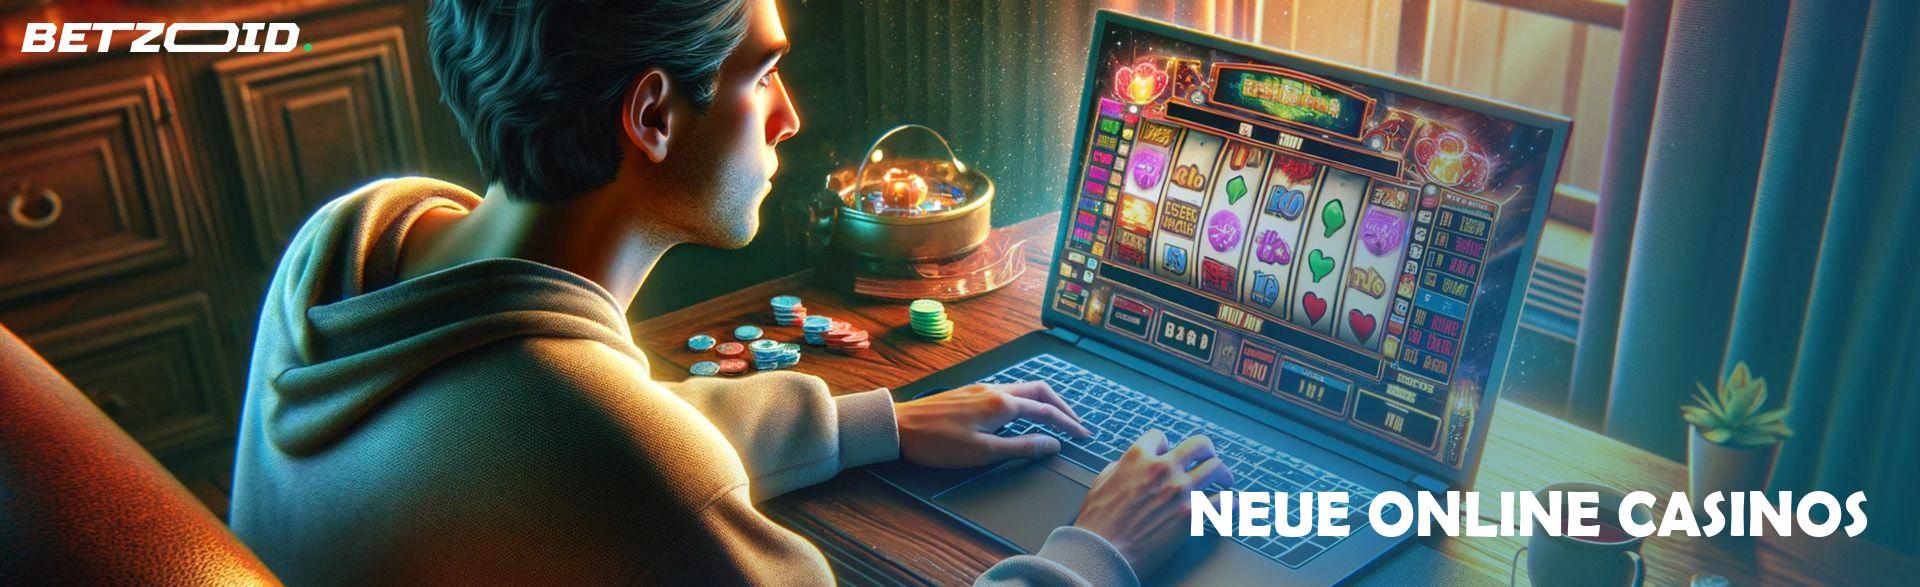 Neue Online Casinos.